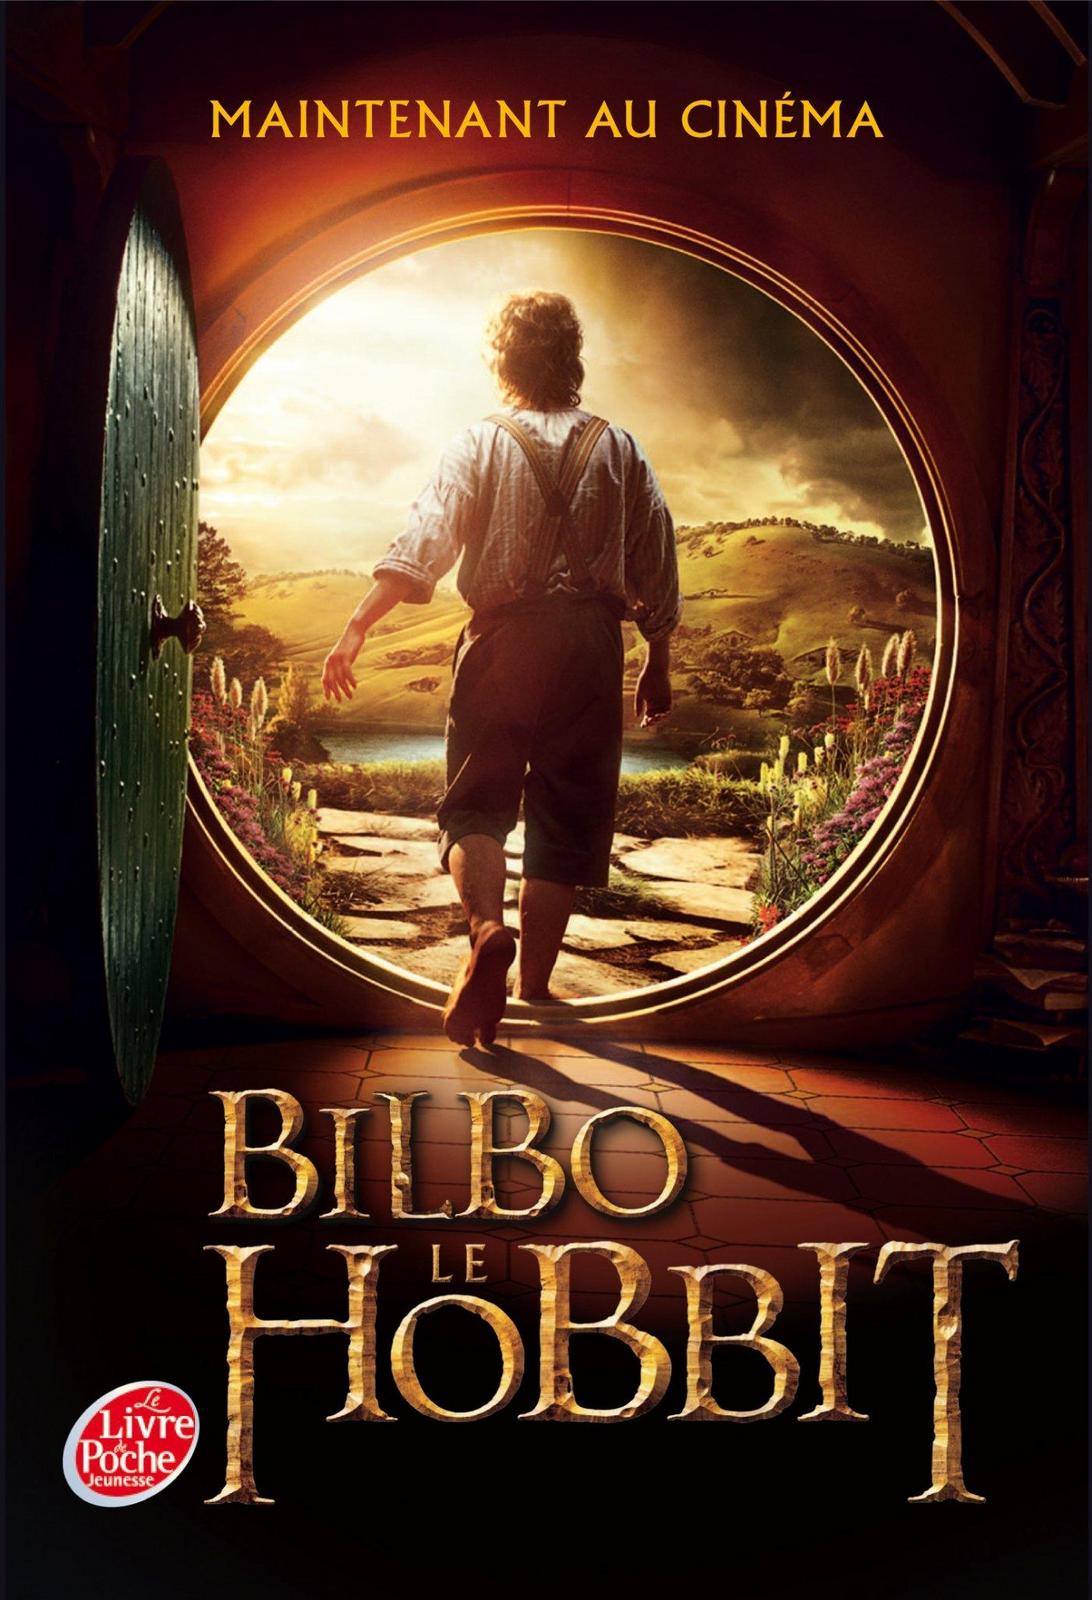 Bilbo le hobbit (French language)